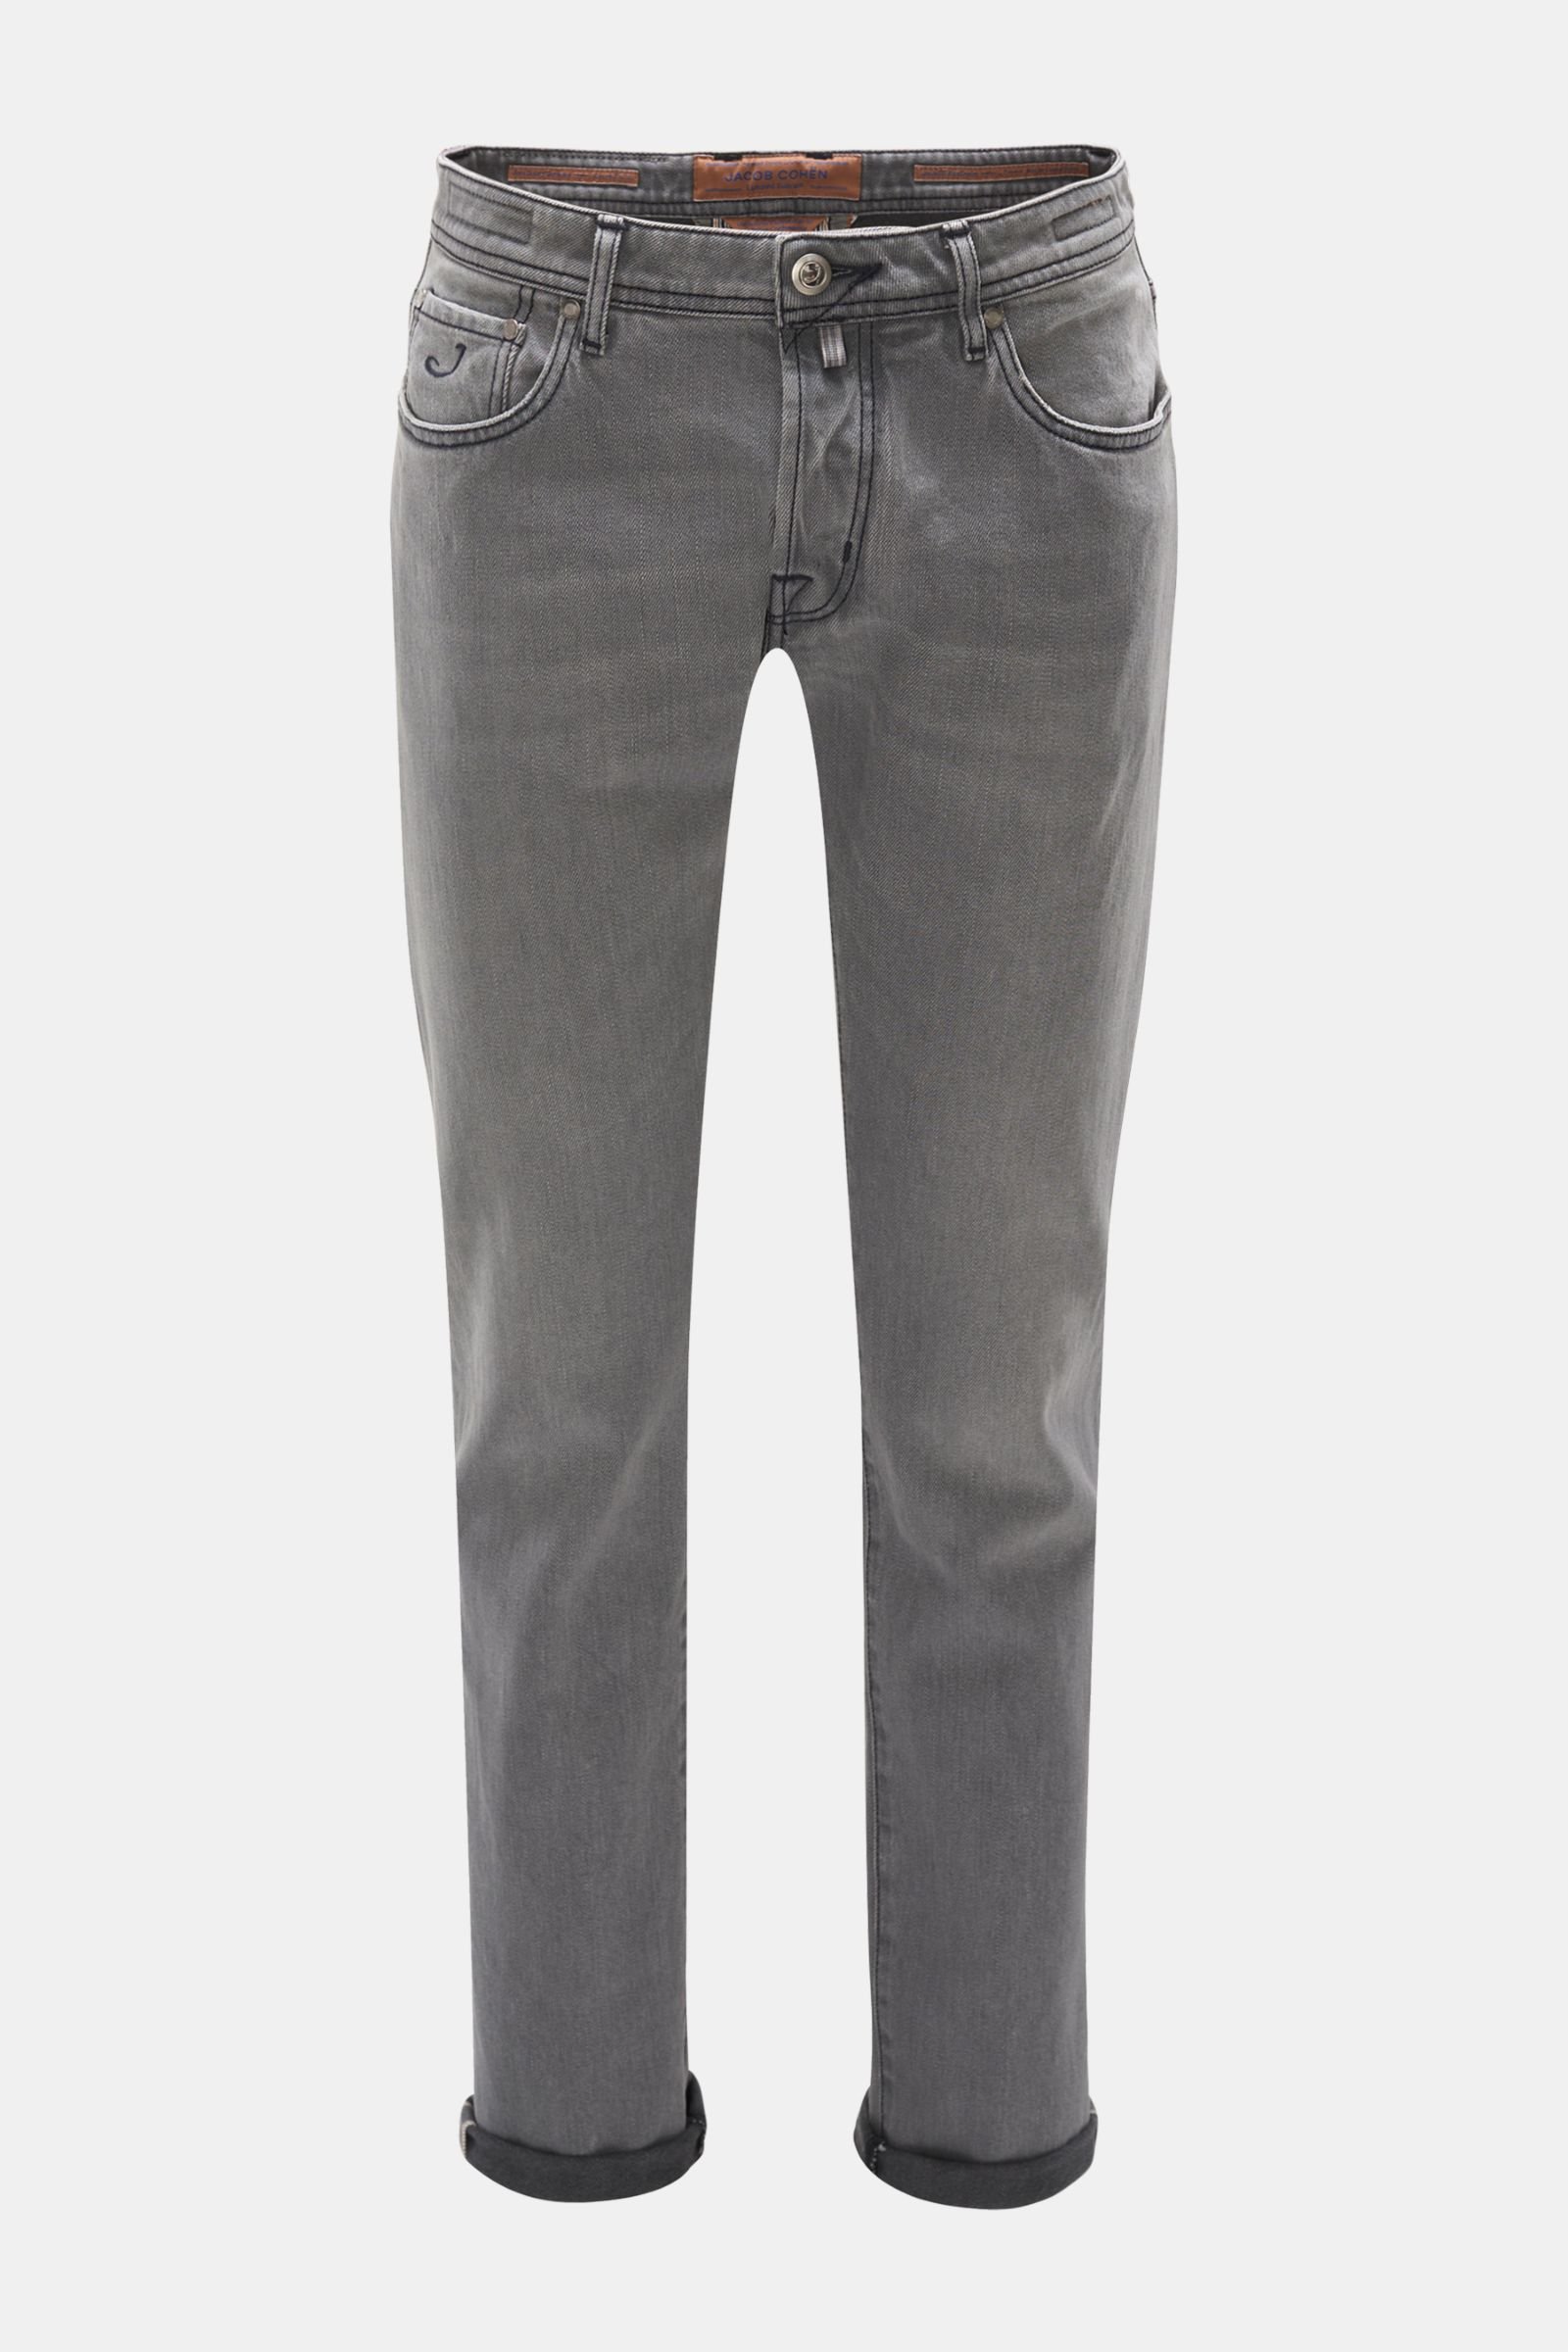 Jeans 'J688 Limited Comfort Slim Fit' grau